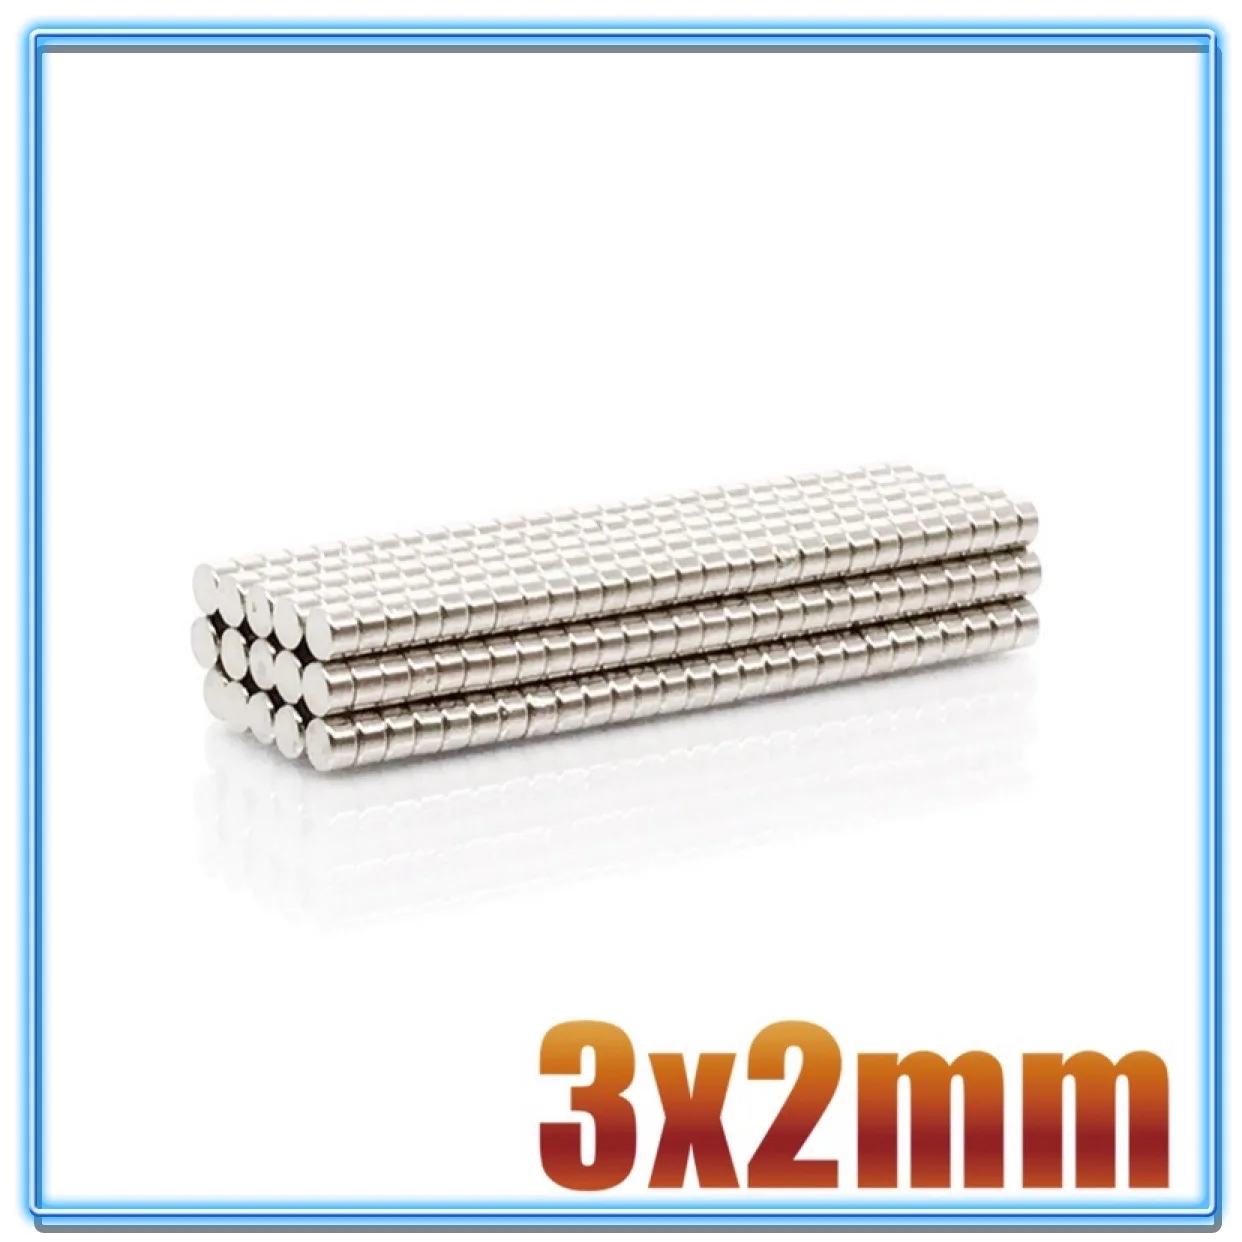 100 Magnets 8x2 mm Neodymium Disc strong round magnet 8mm dia x 2mm craft fridge 